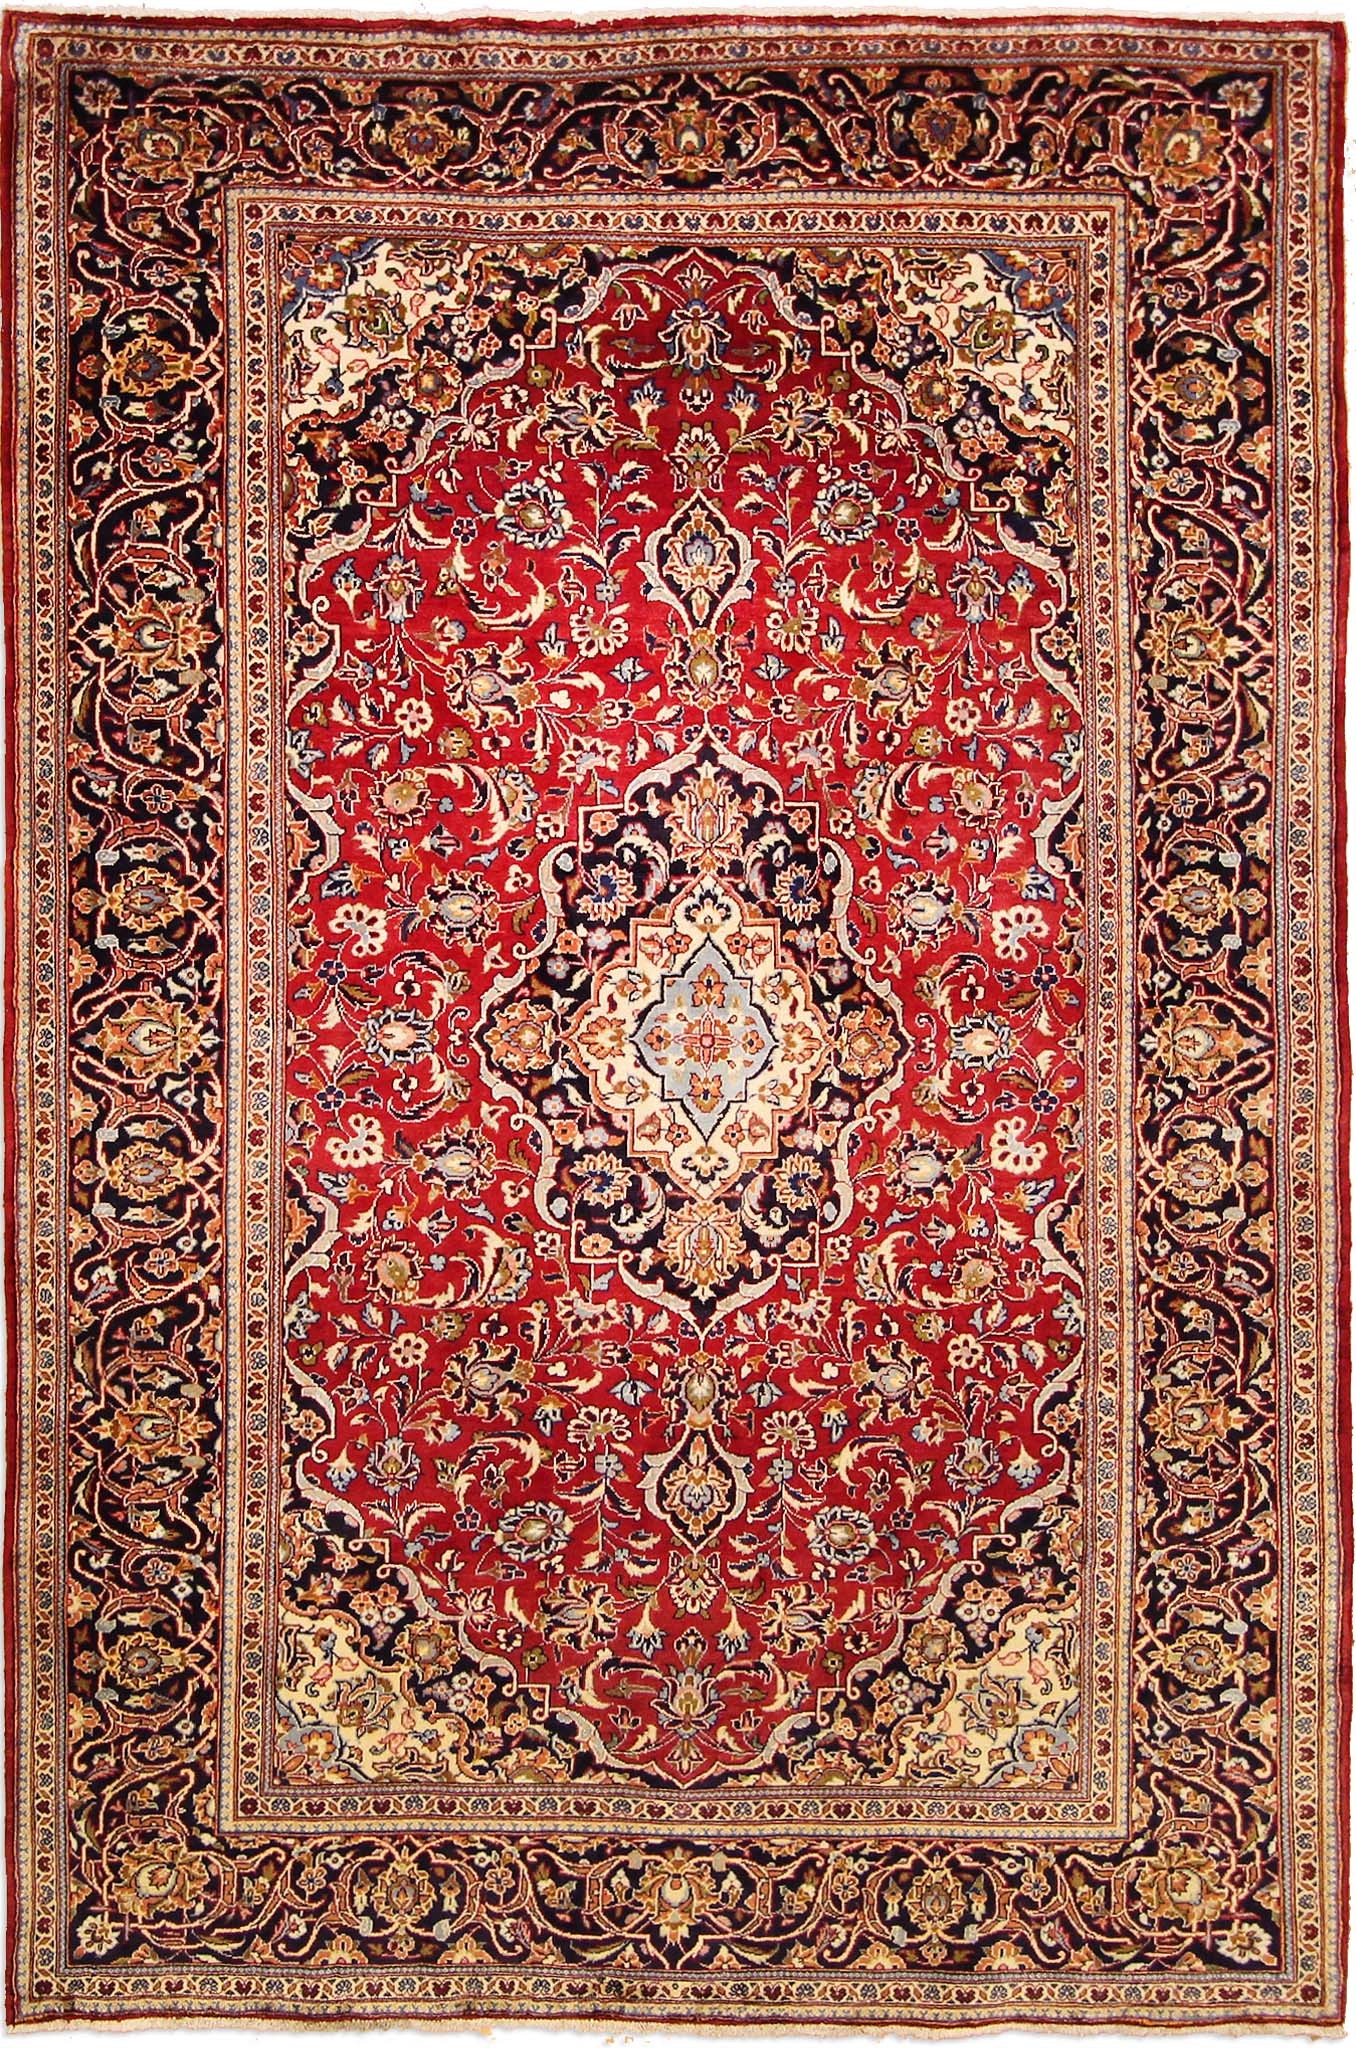 carpet wallpaper,carpet,rug,prayer rug,textile,flooring